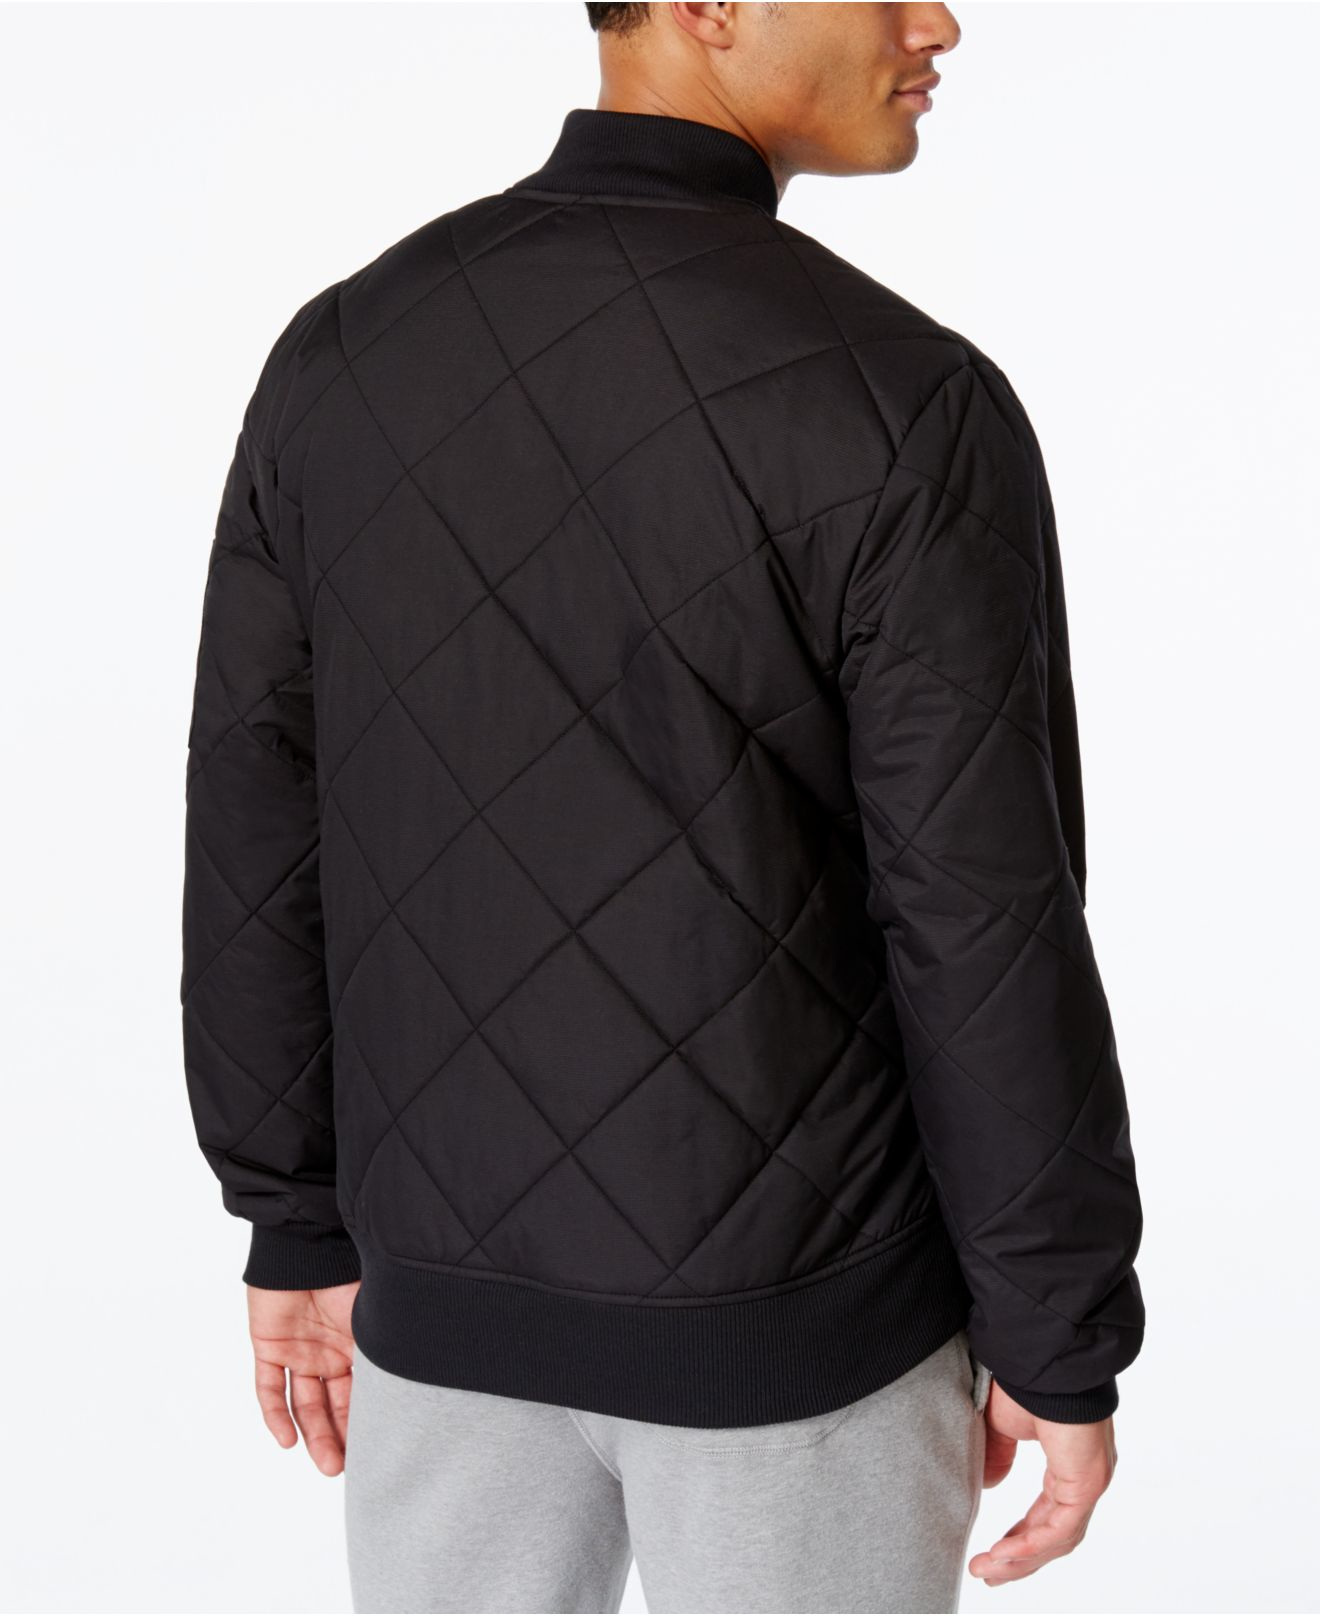 Adidas originals Originals Men's Superstar Bomber Jacket in Black for ...